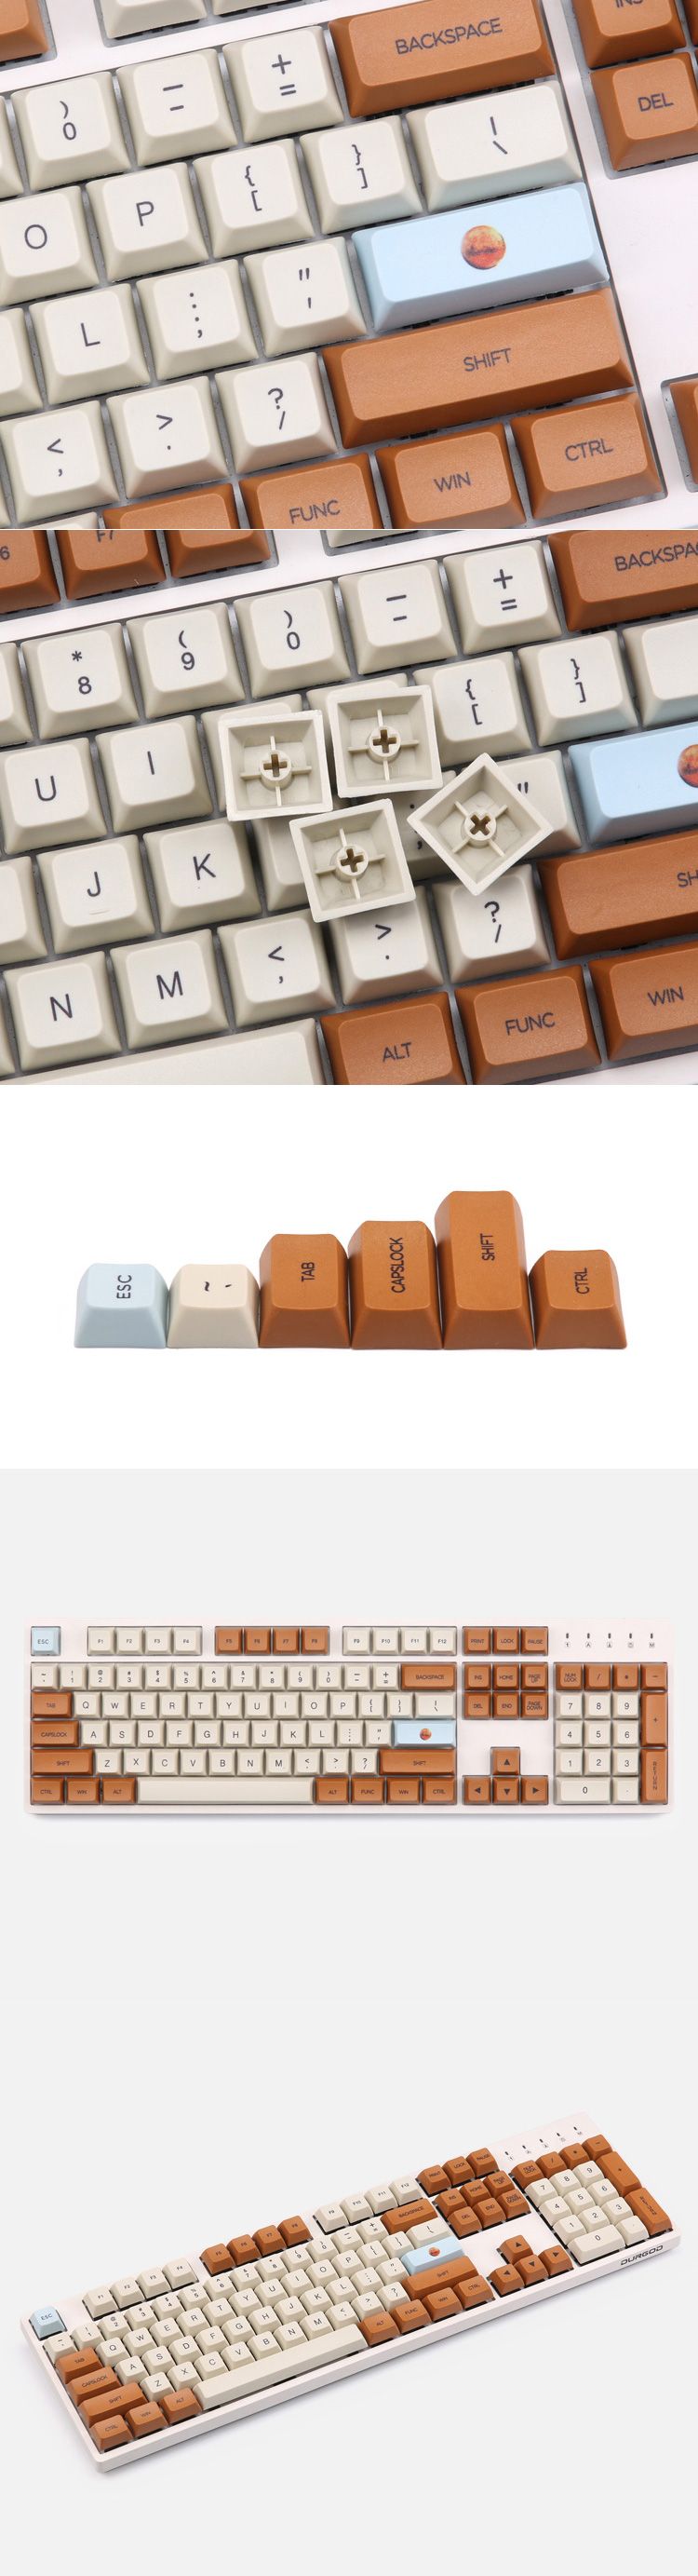 KBDfans-Mars-Keycaps-XDA-Sublimation-PBT-Two-Color-121-Keys-Mechanical-Keyboard-Keycap-1617857